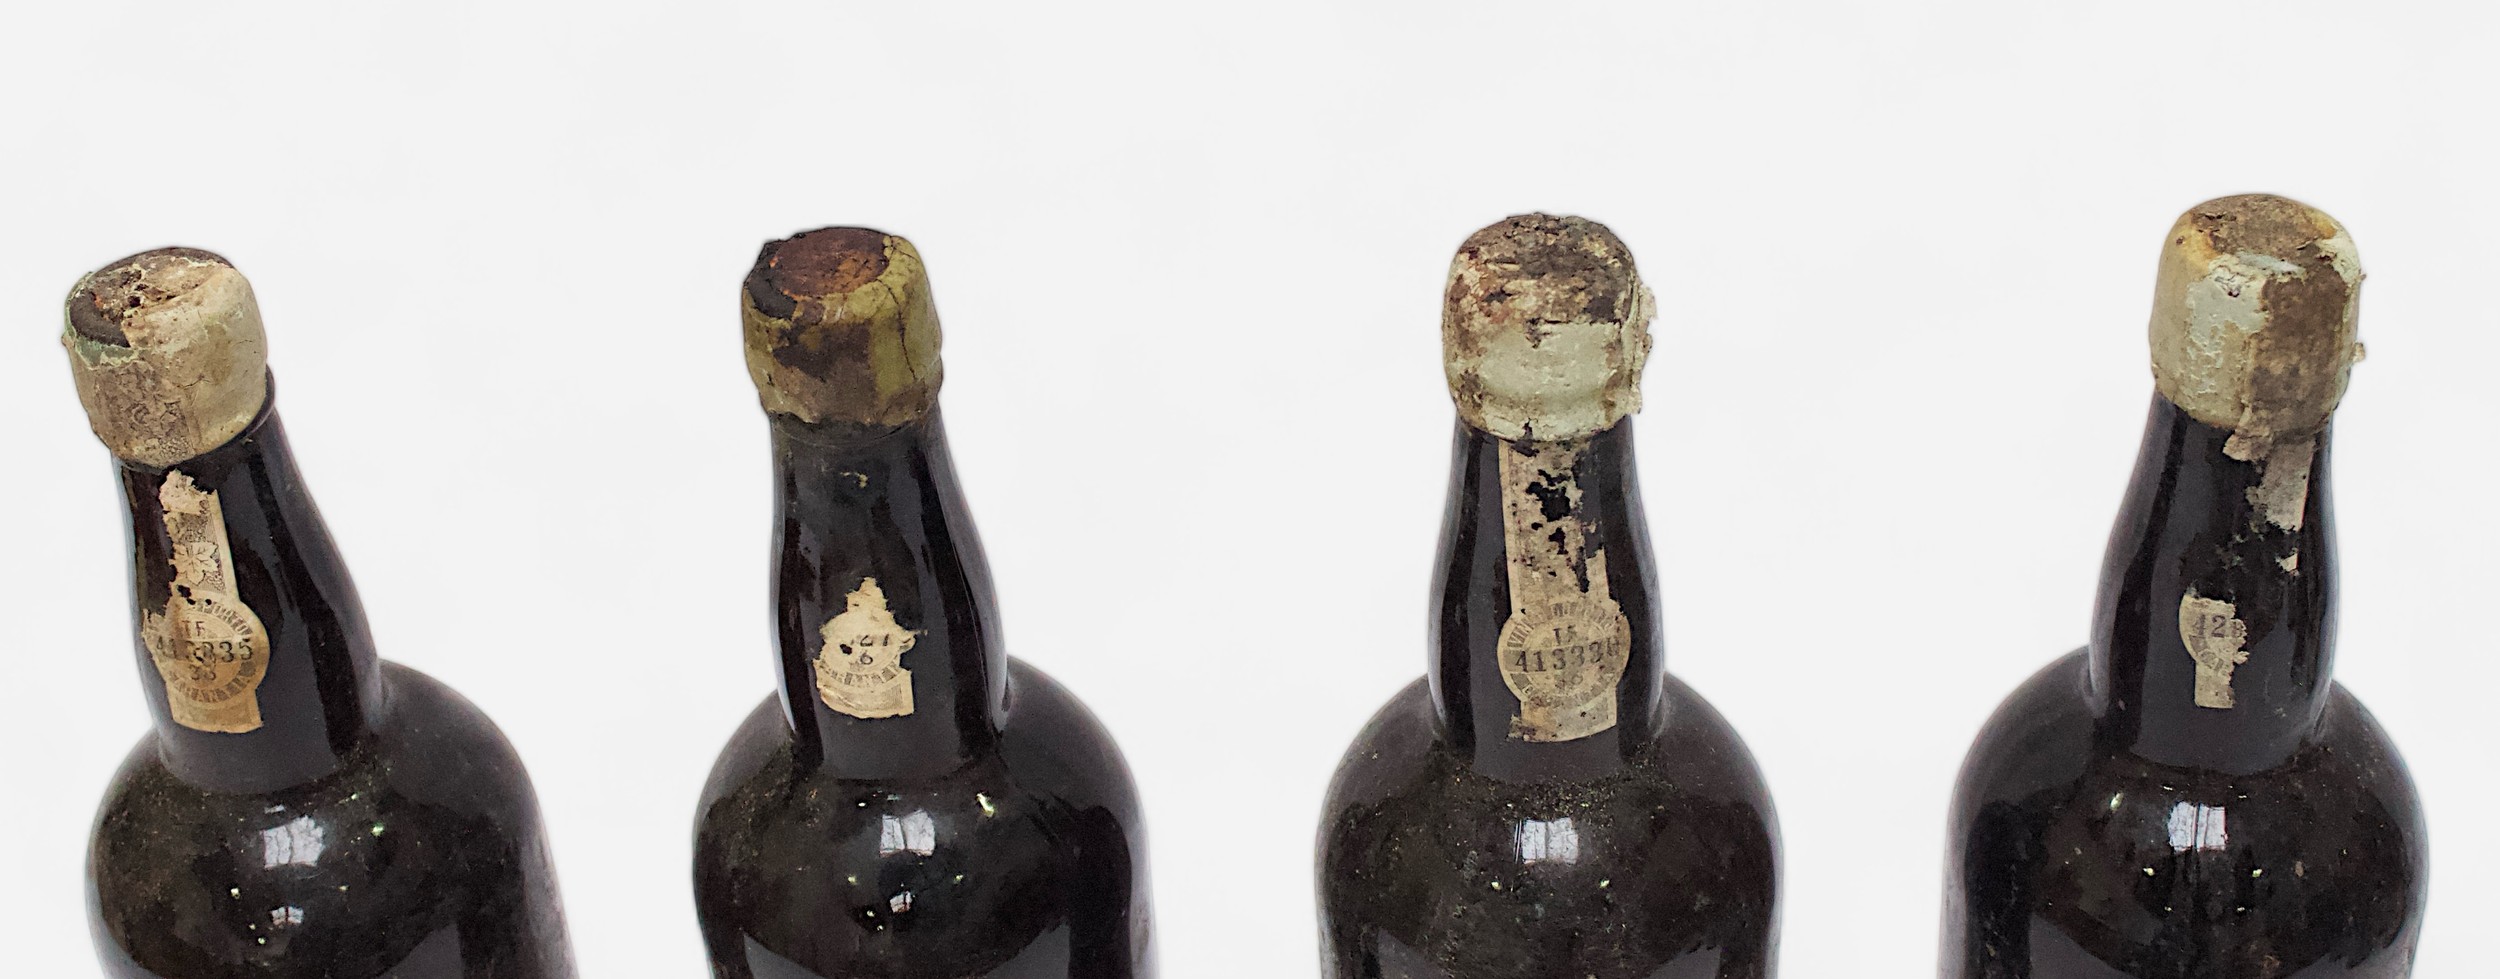 A collection of ten 75cl bottles of Taylors Quinta de Vargellas 1974 vintage port, varying ullage, - Image 3 of 7